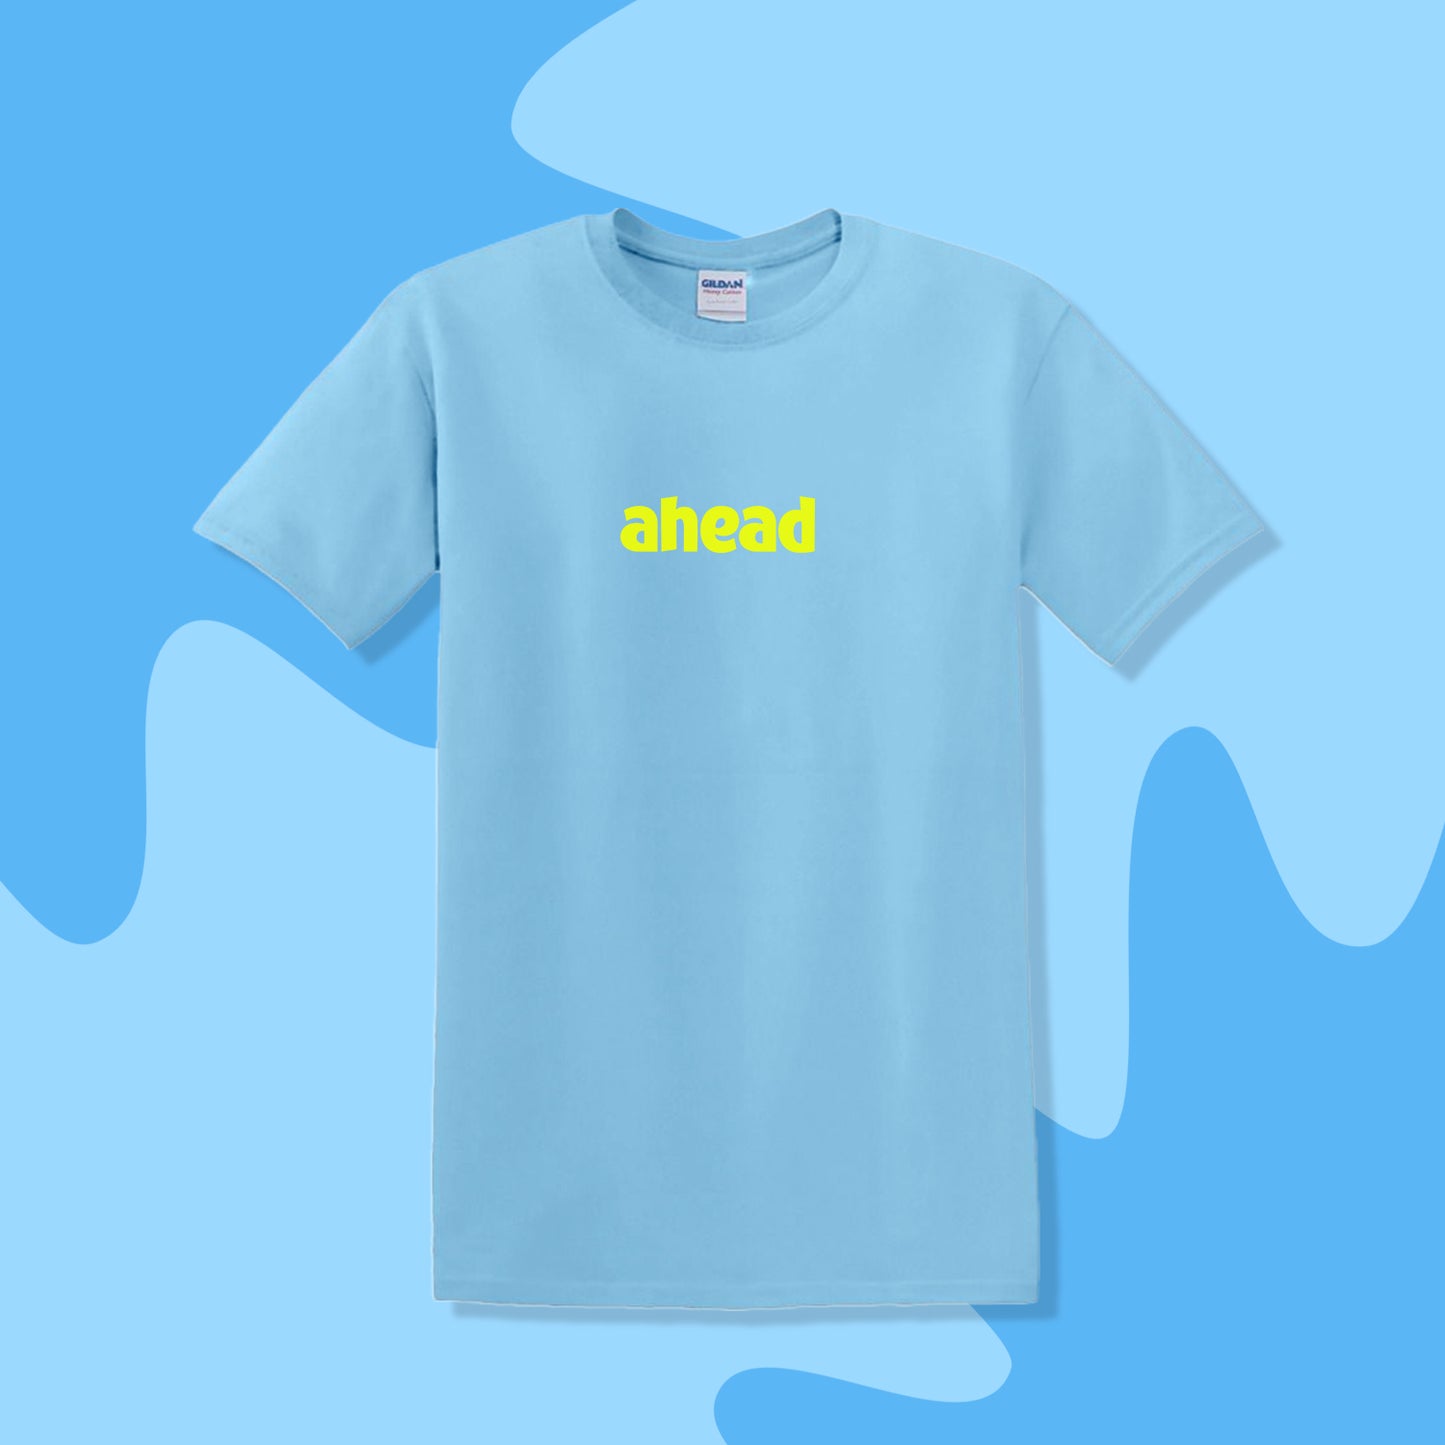 ahead T shirt (unisex)